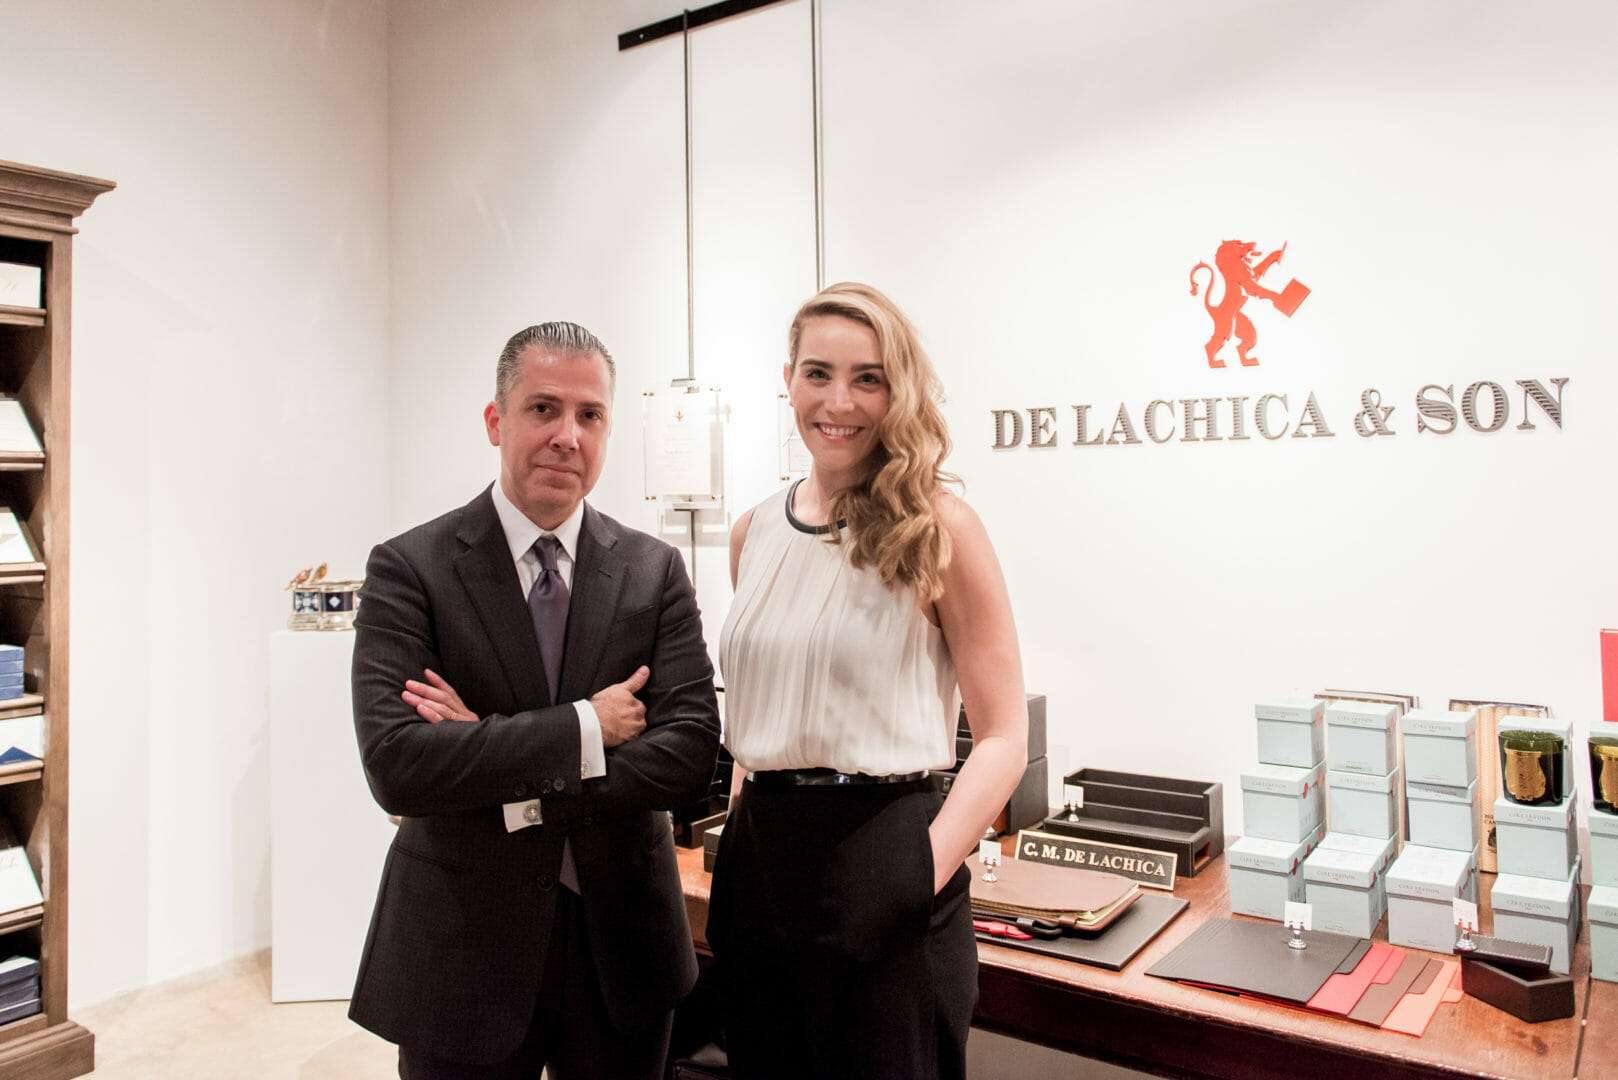 Touring the De Lachica & Son Showroom